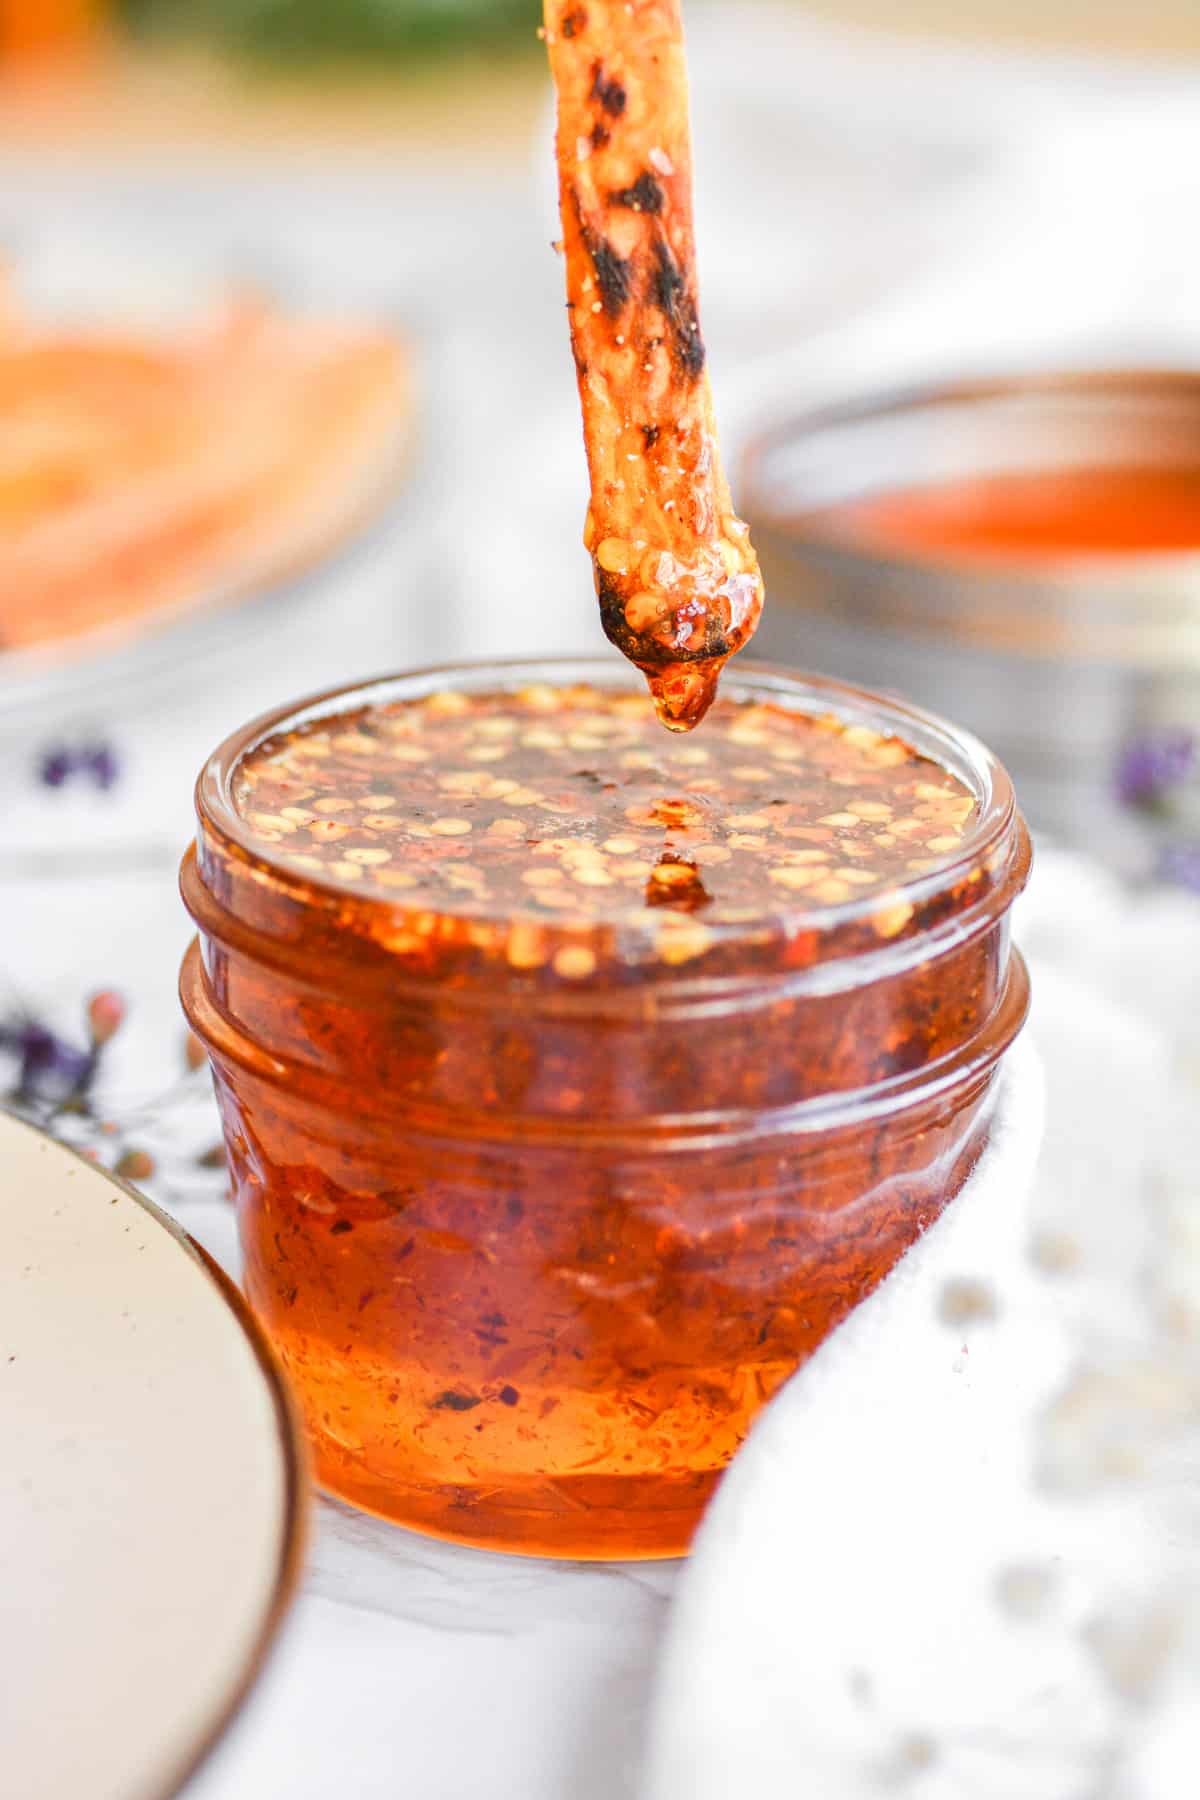 Vegan Hot honey dripping off of a sweet potato fry